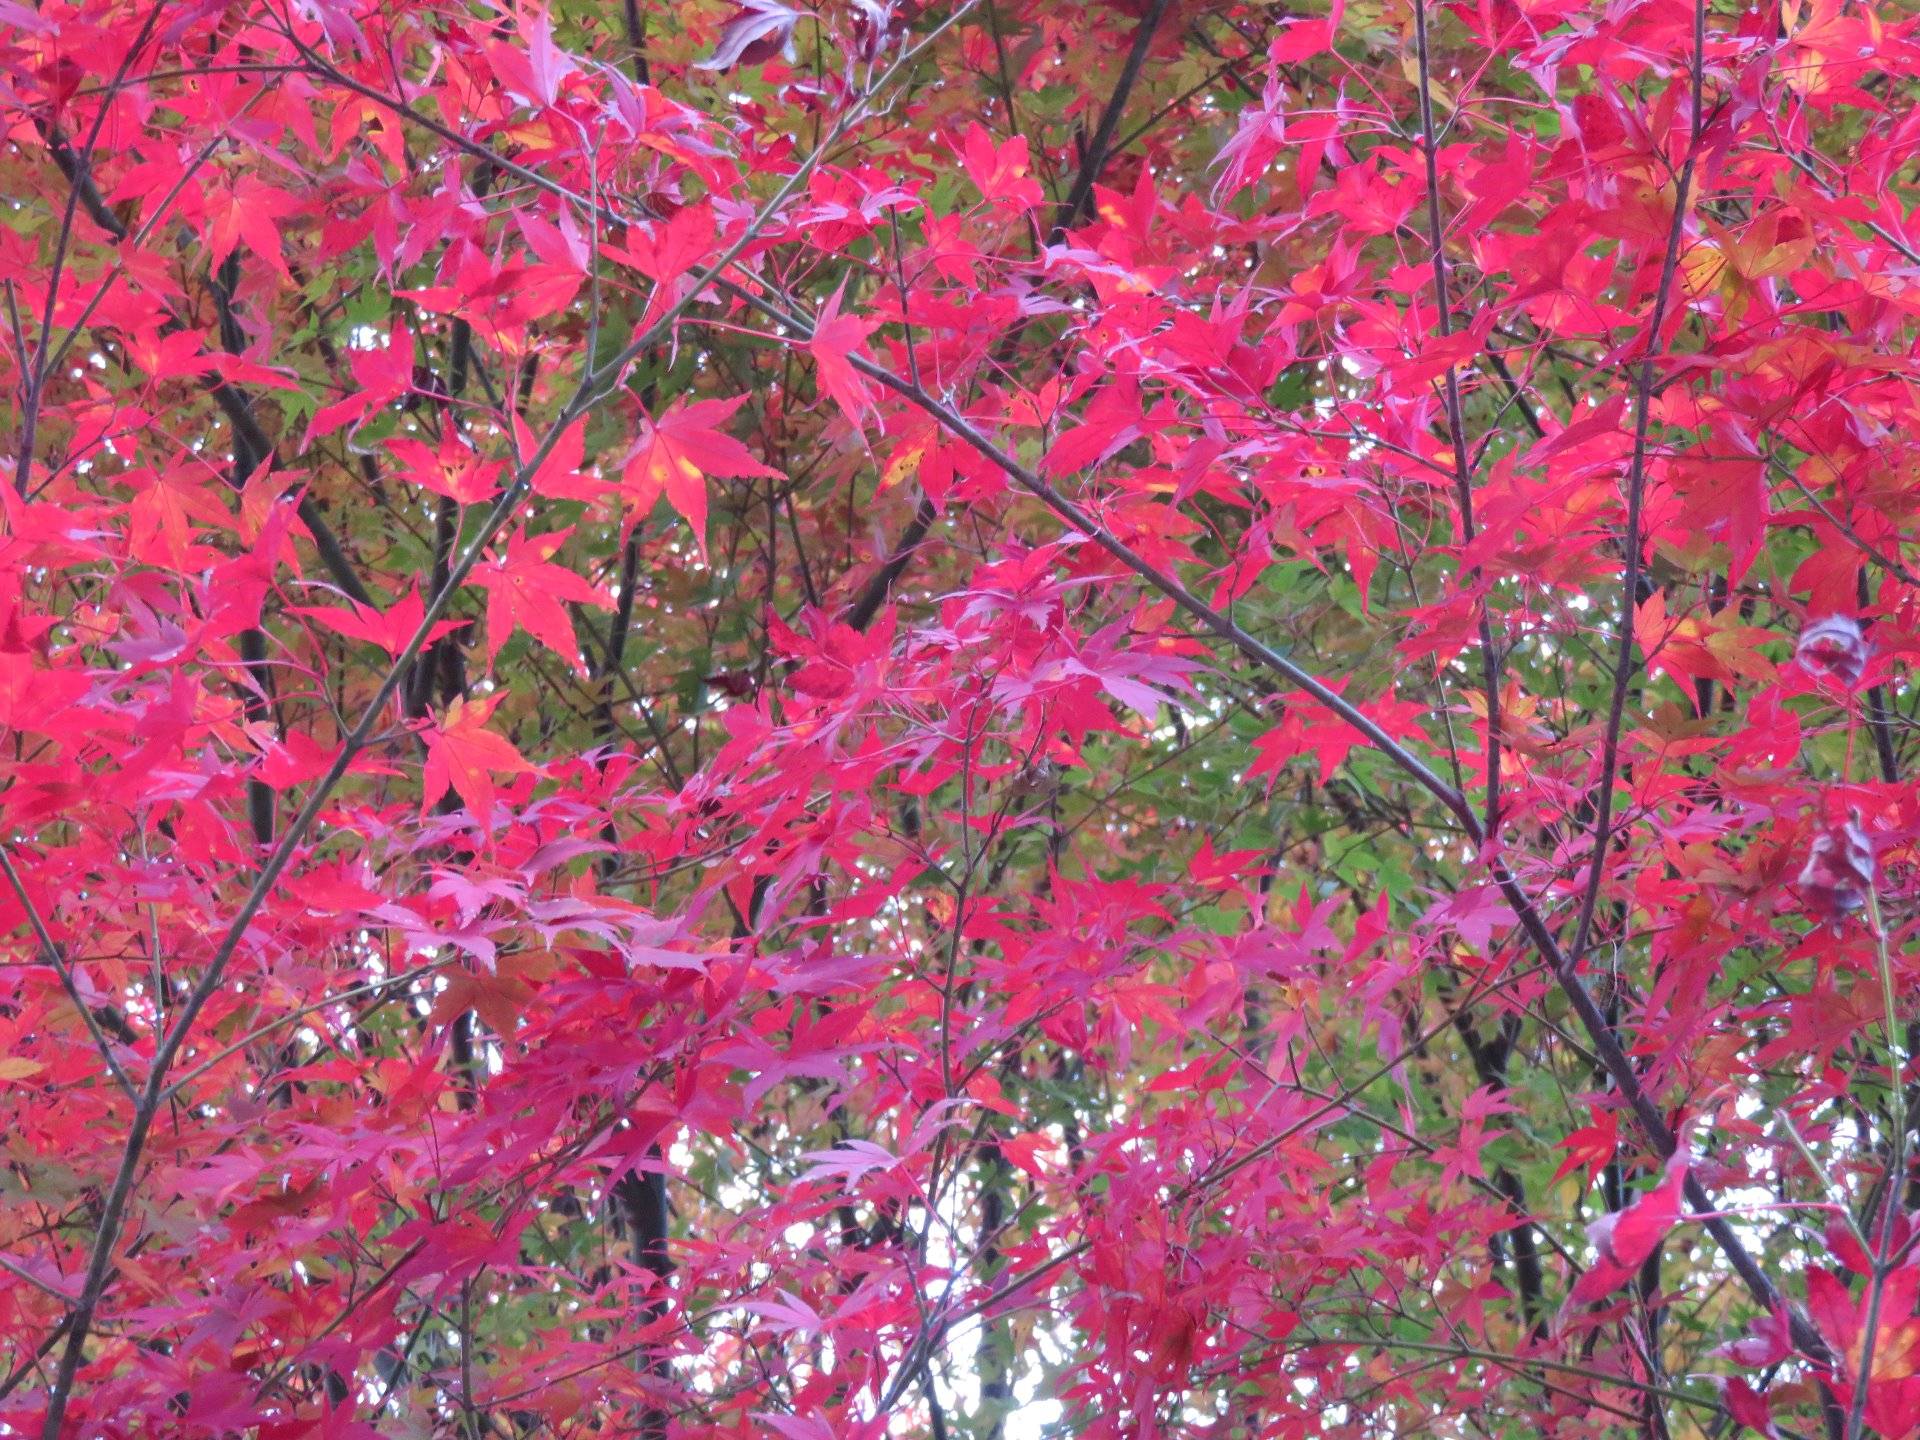 Umegashima Autumn leaves